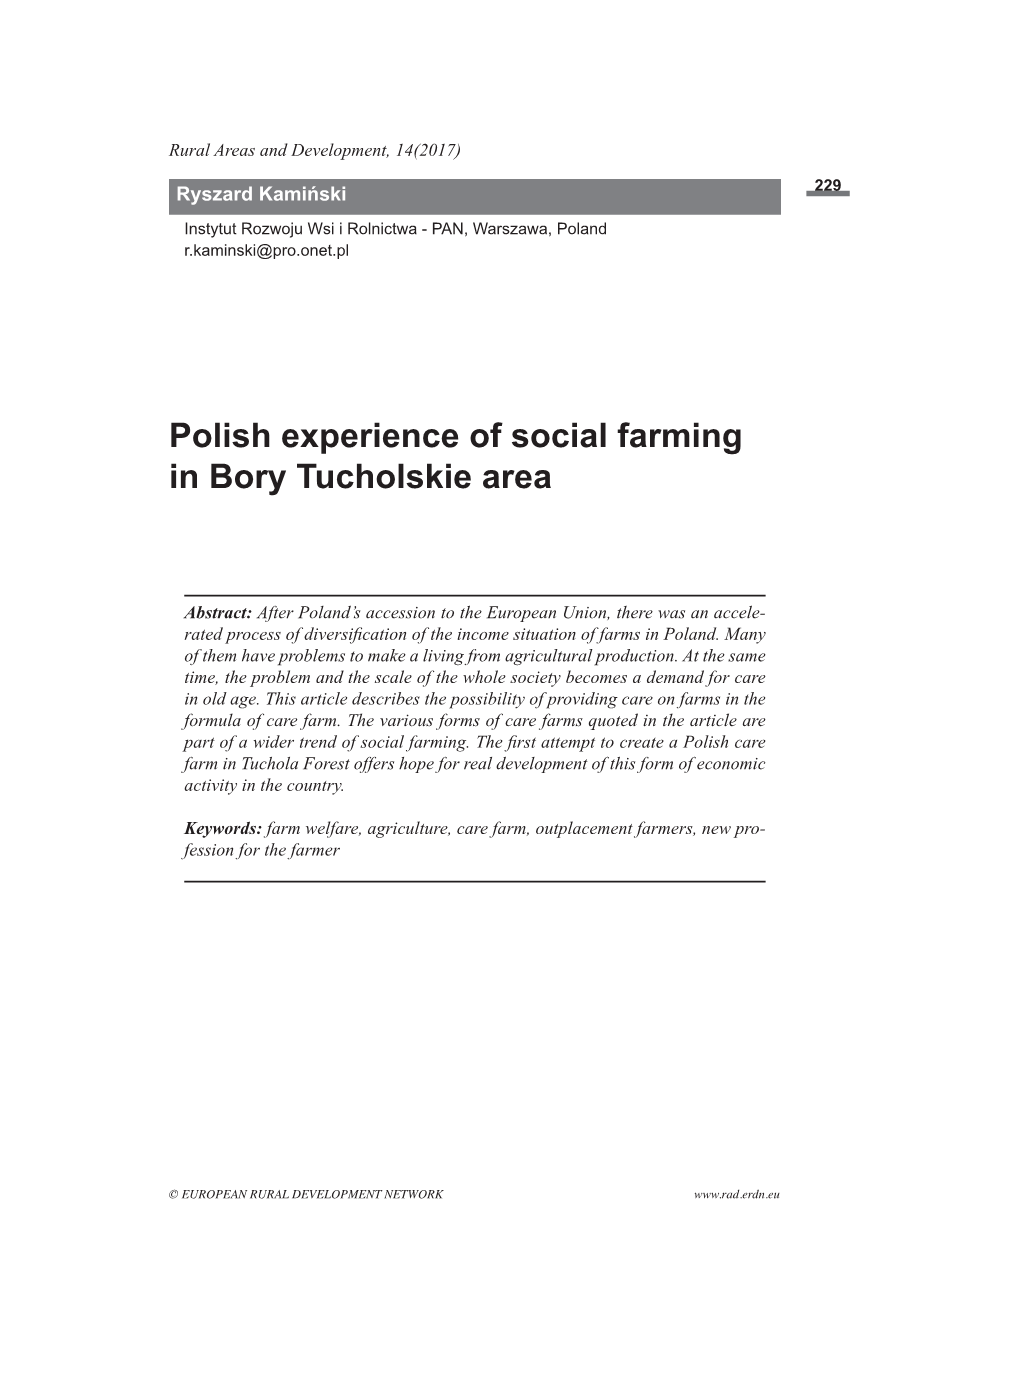 Polish Experience of Social Farming in Bory Tucholskie Area